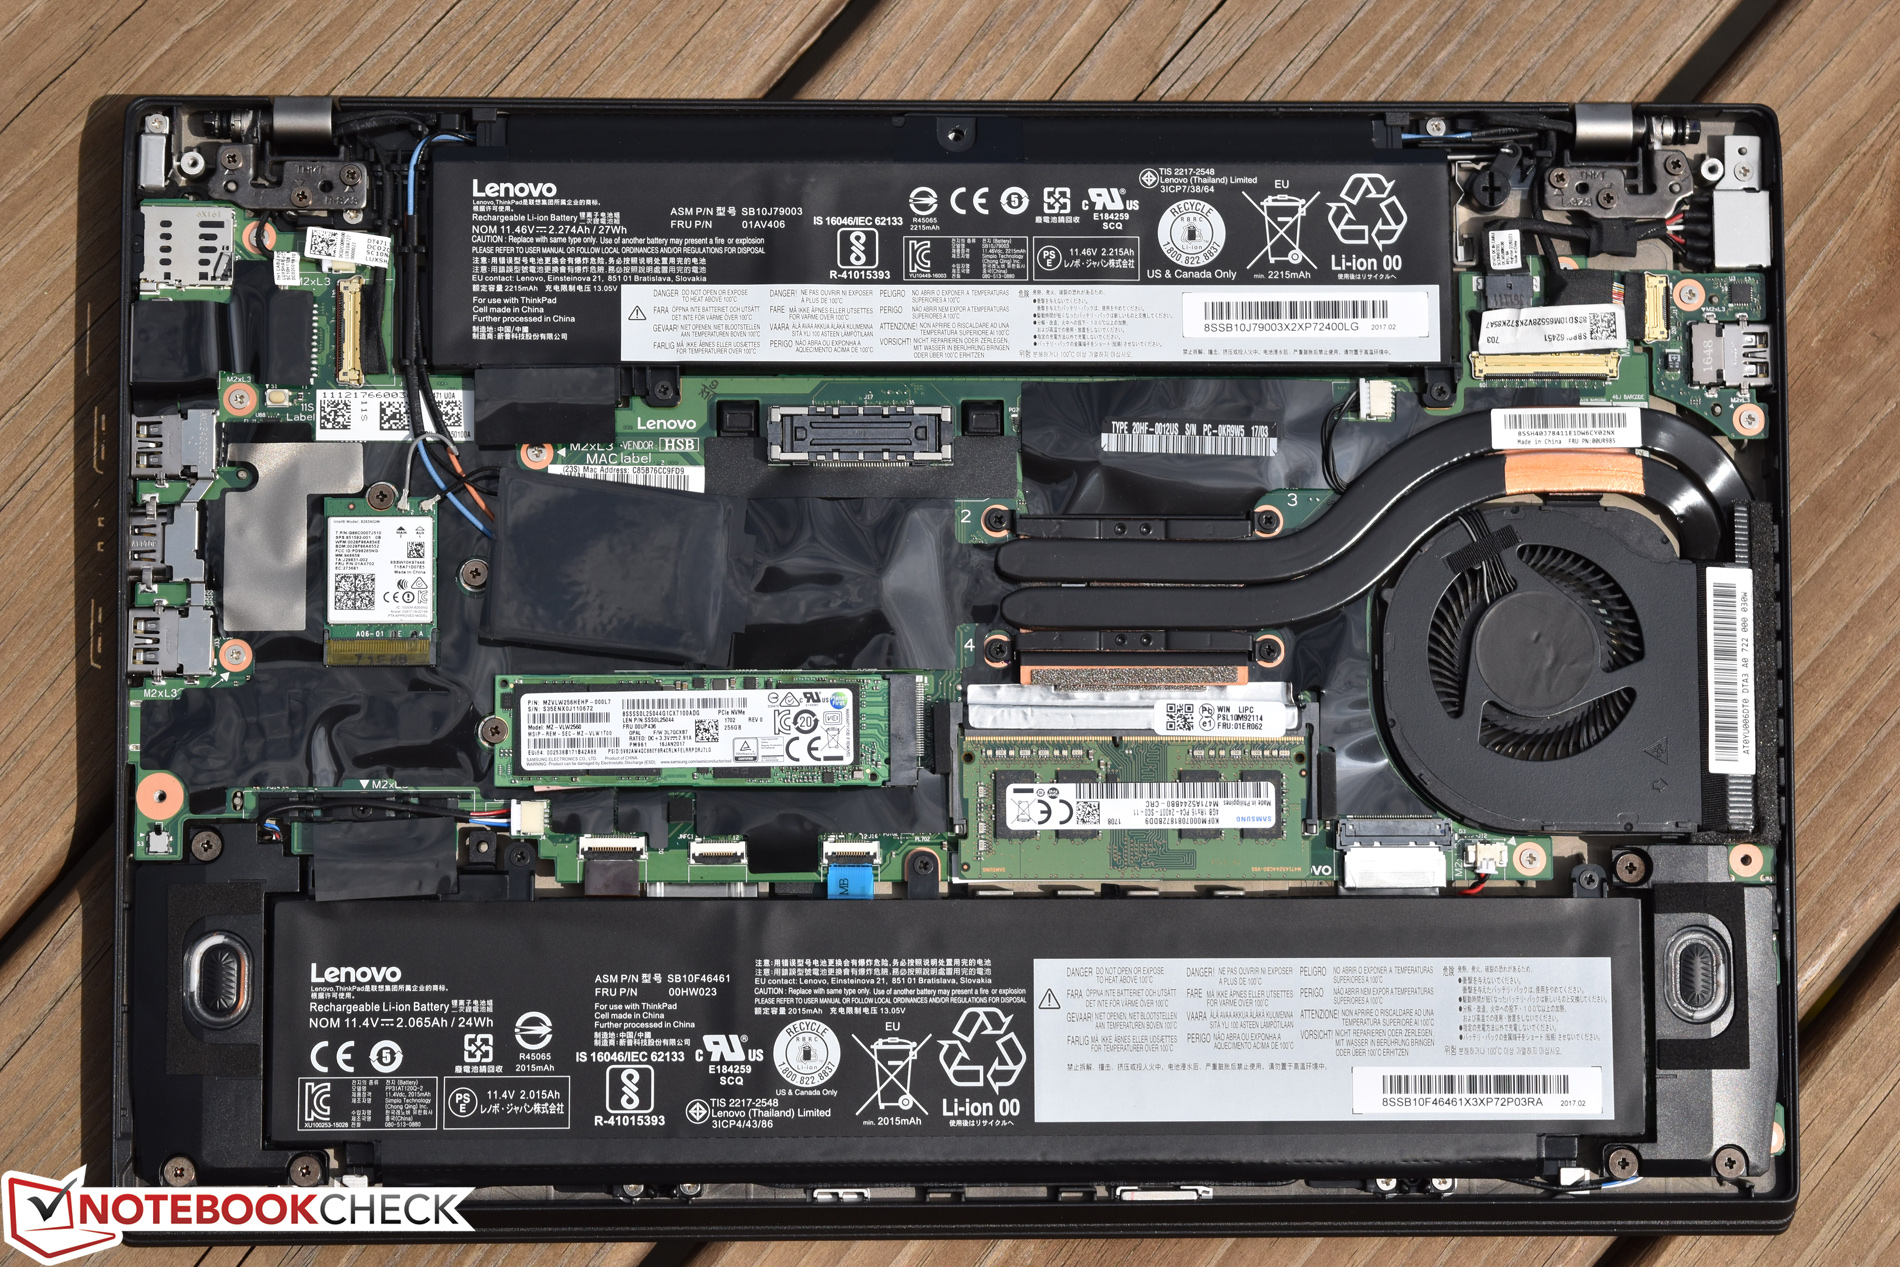 Обзор Lenovo ThinkPad T470s